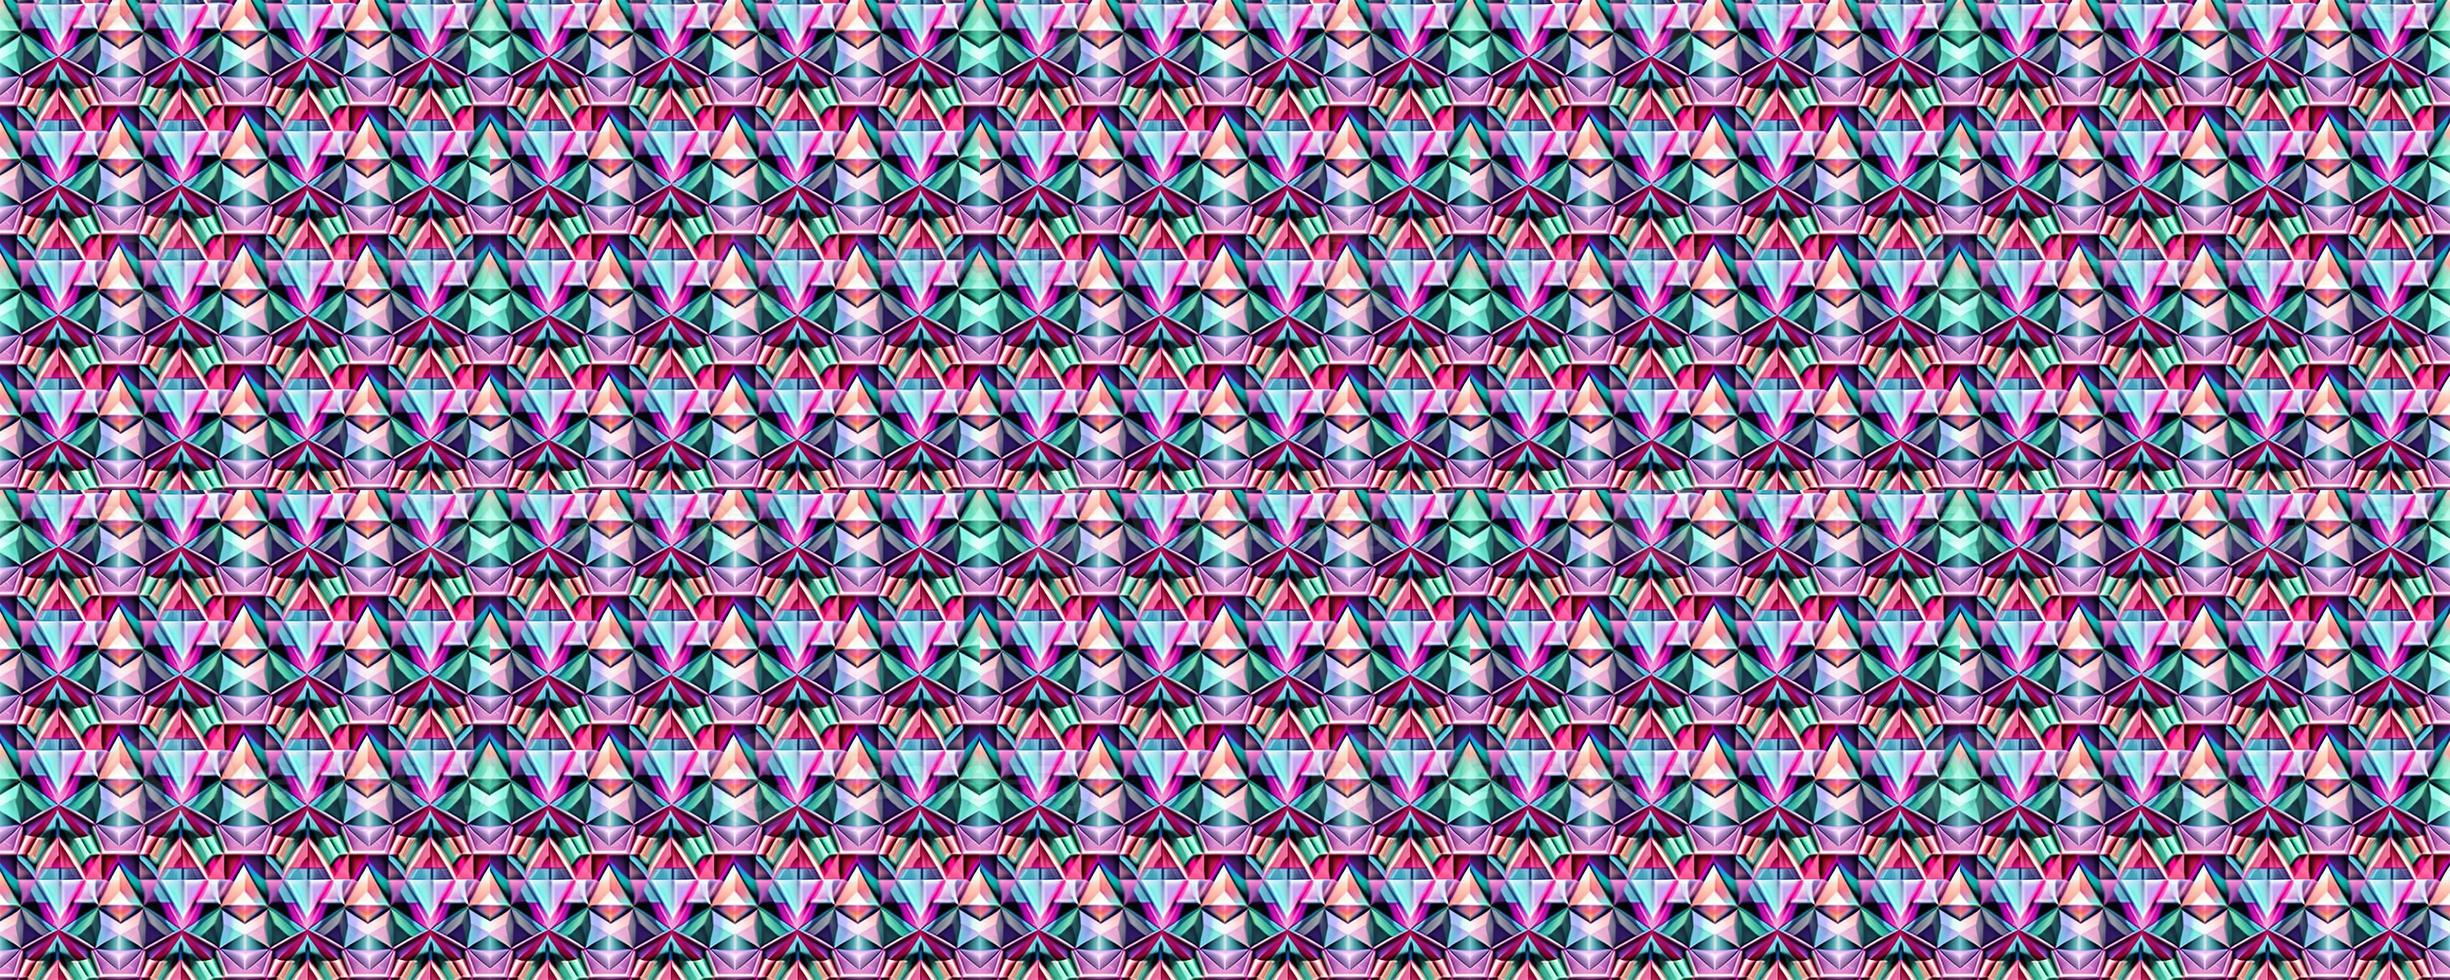 Geometric abstract seamless pattern photo